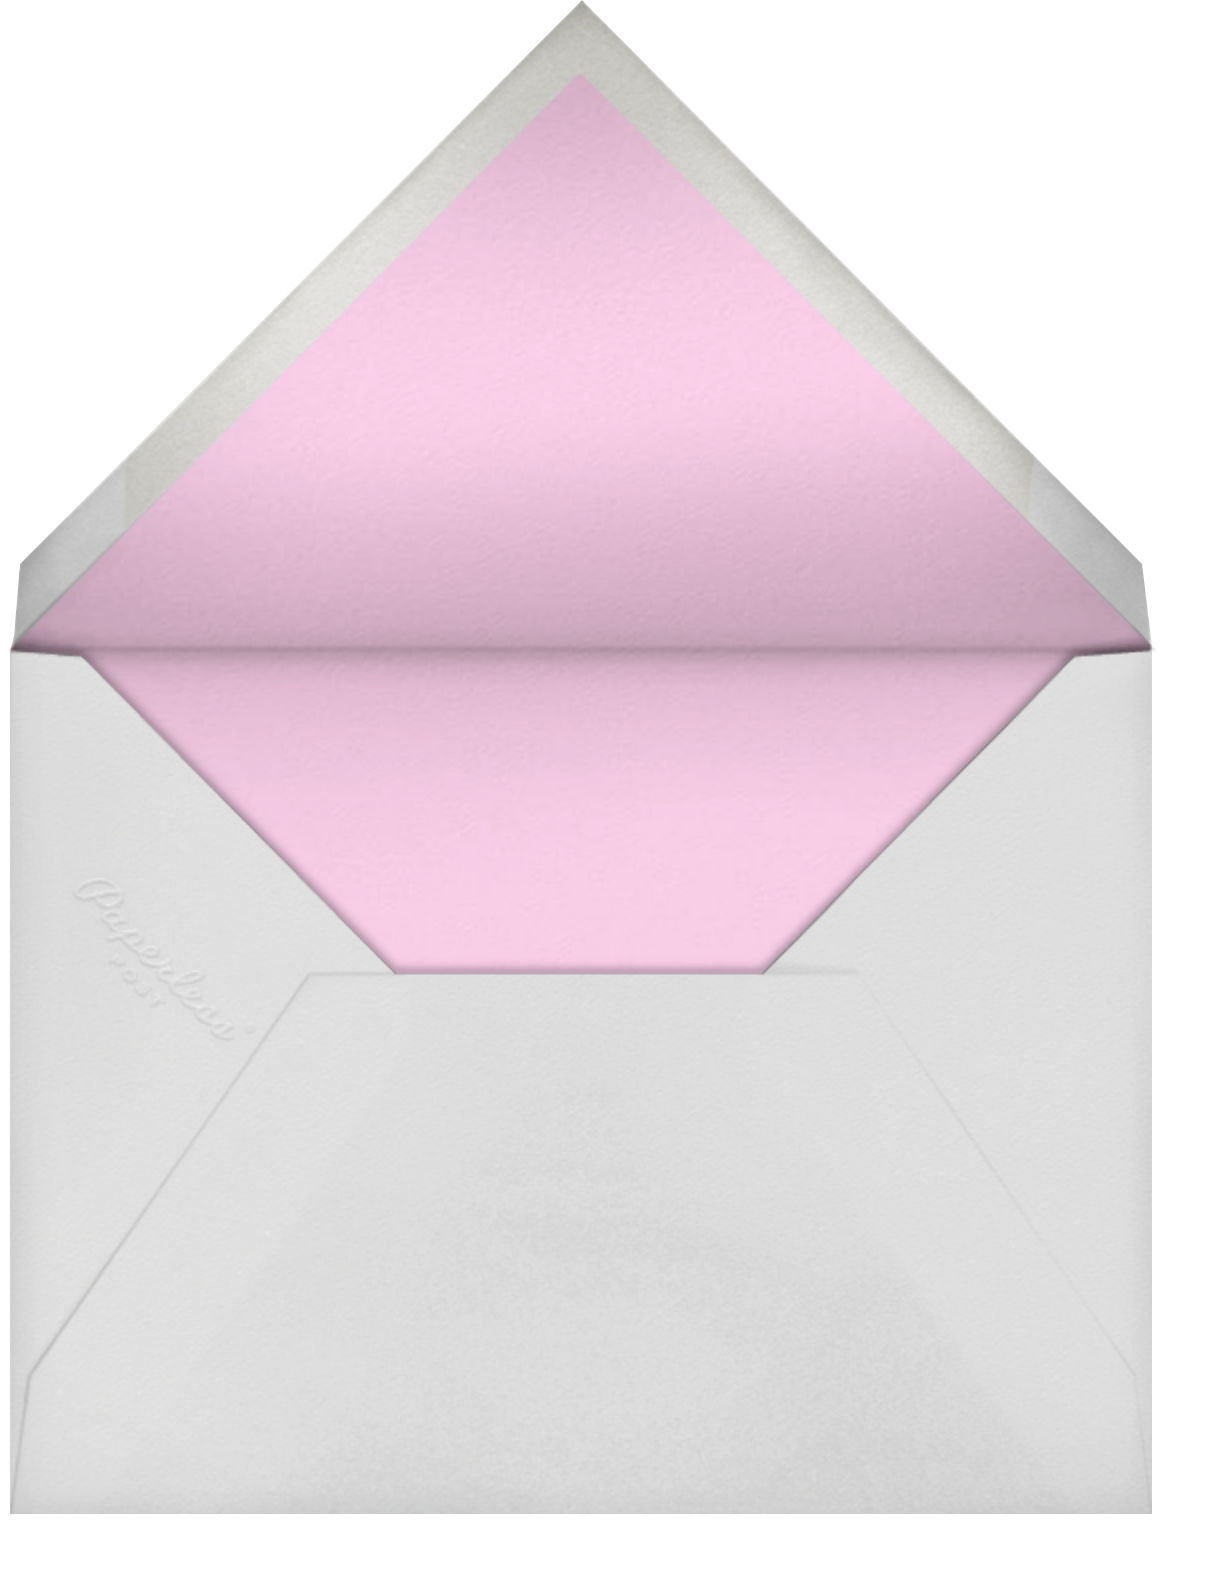 Jar Flowers (Bodil Jane) - Red Cap Cards - Envelope